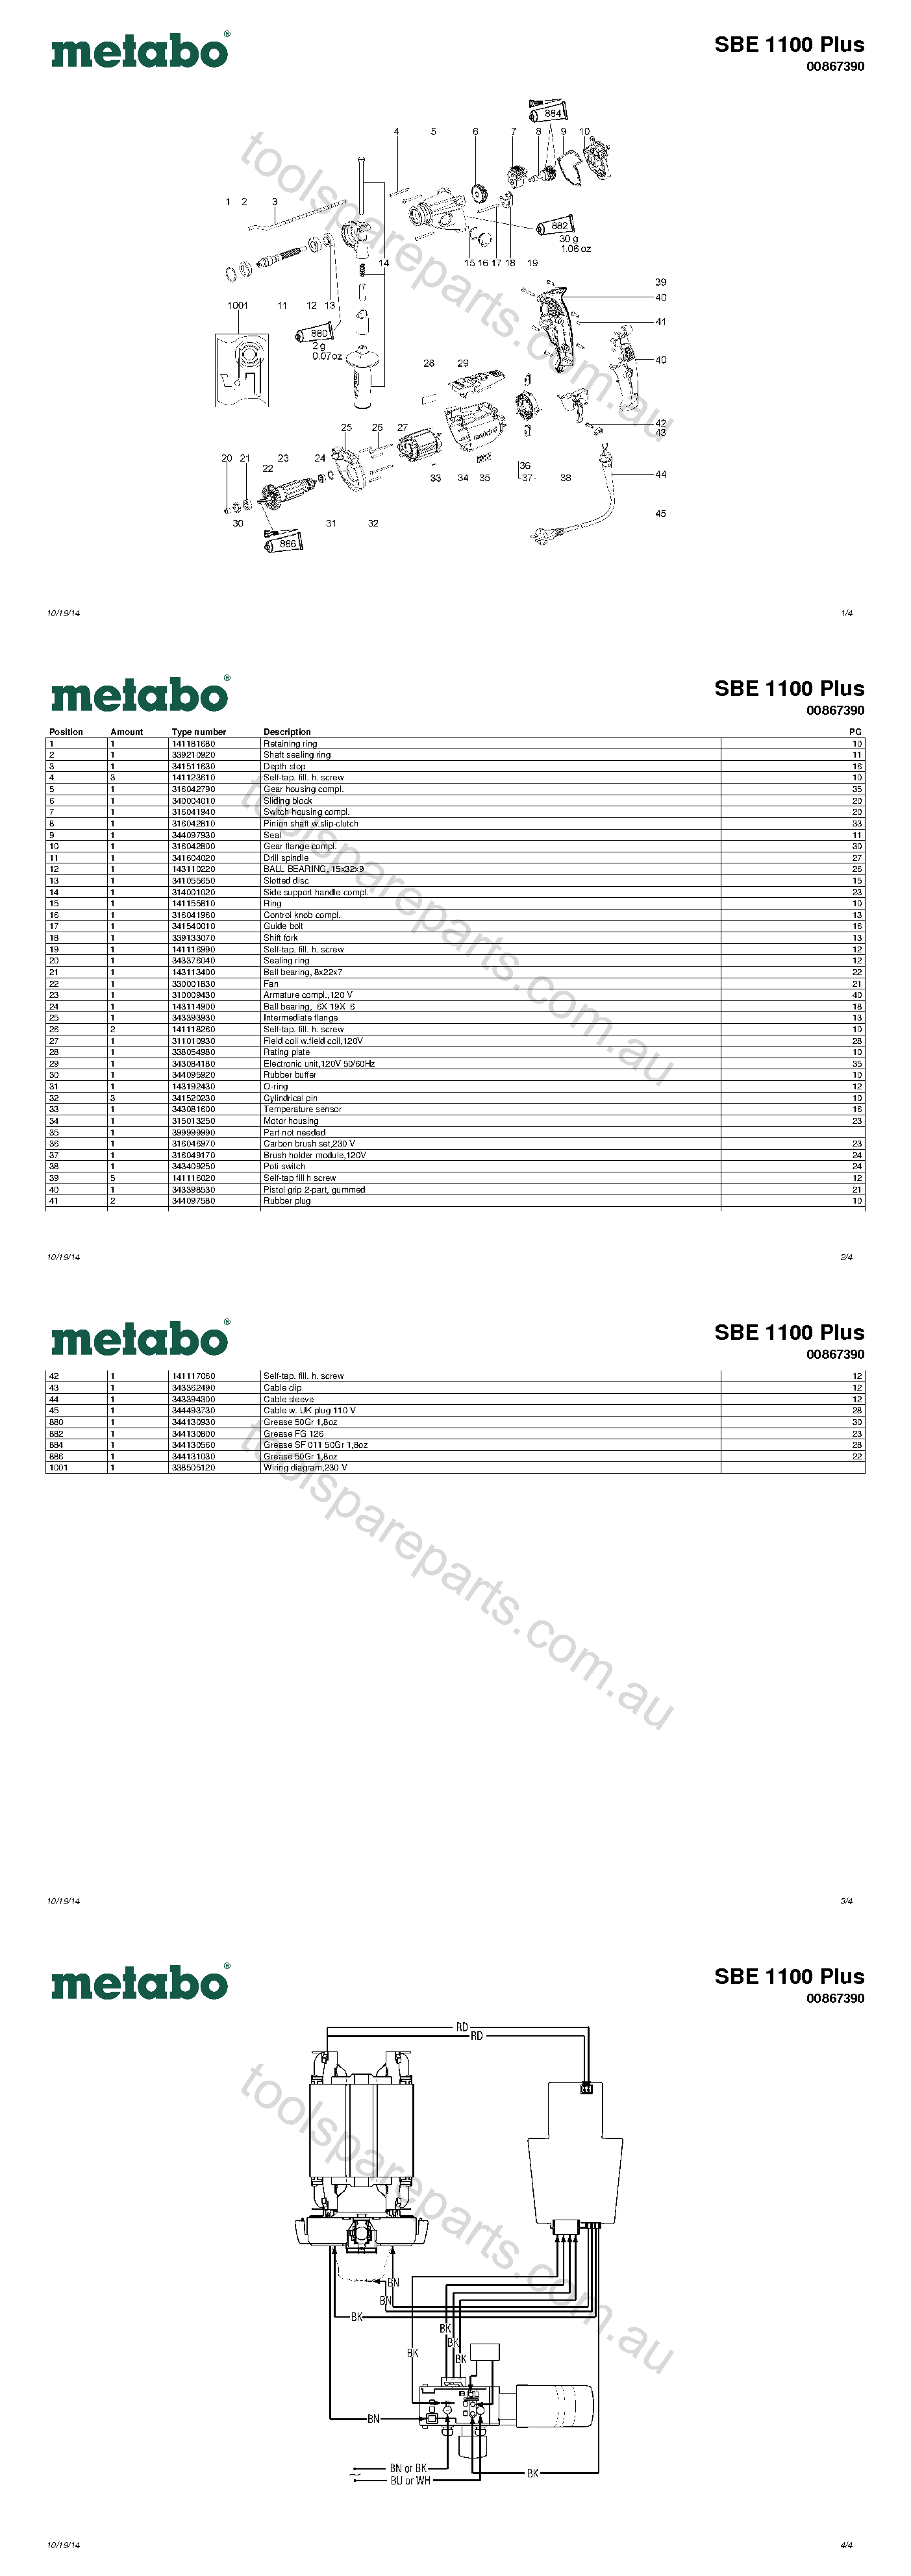 Metabo SBE 1100 Plus 00867390  Diagram 1